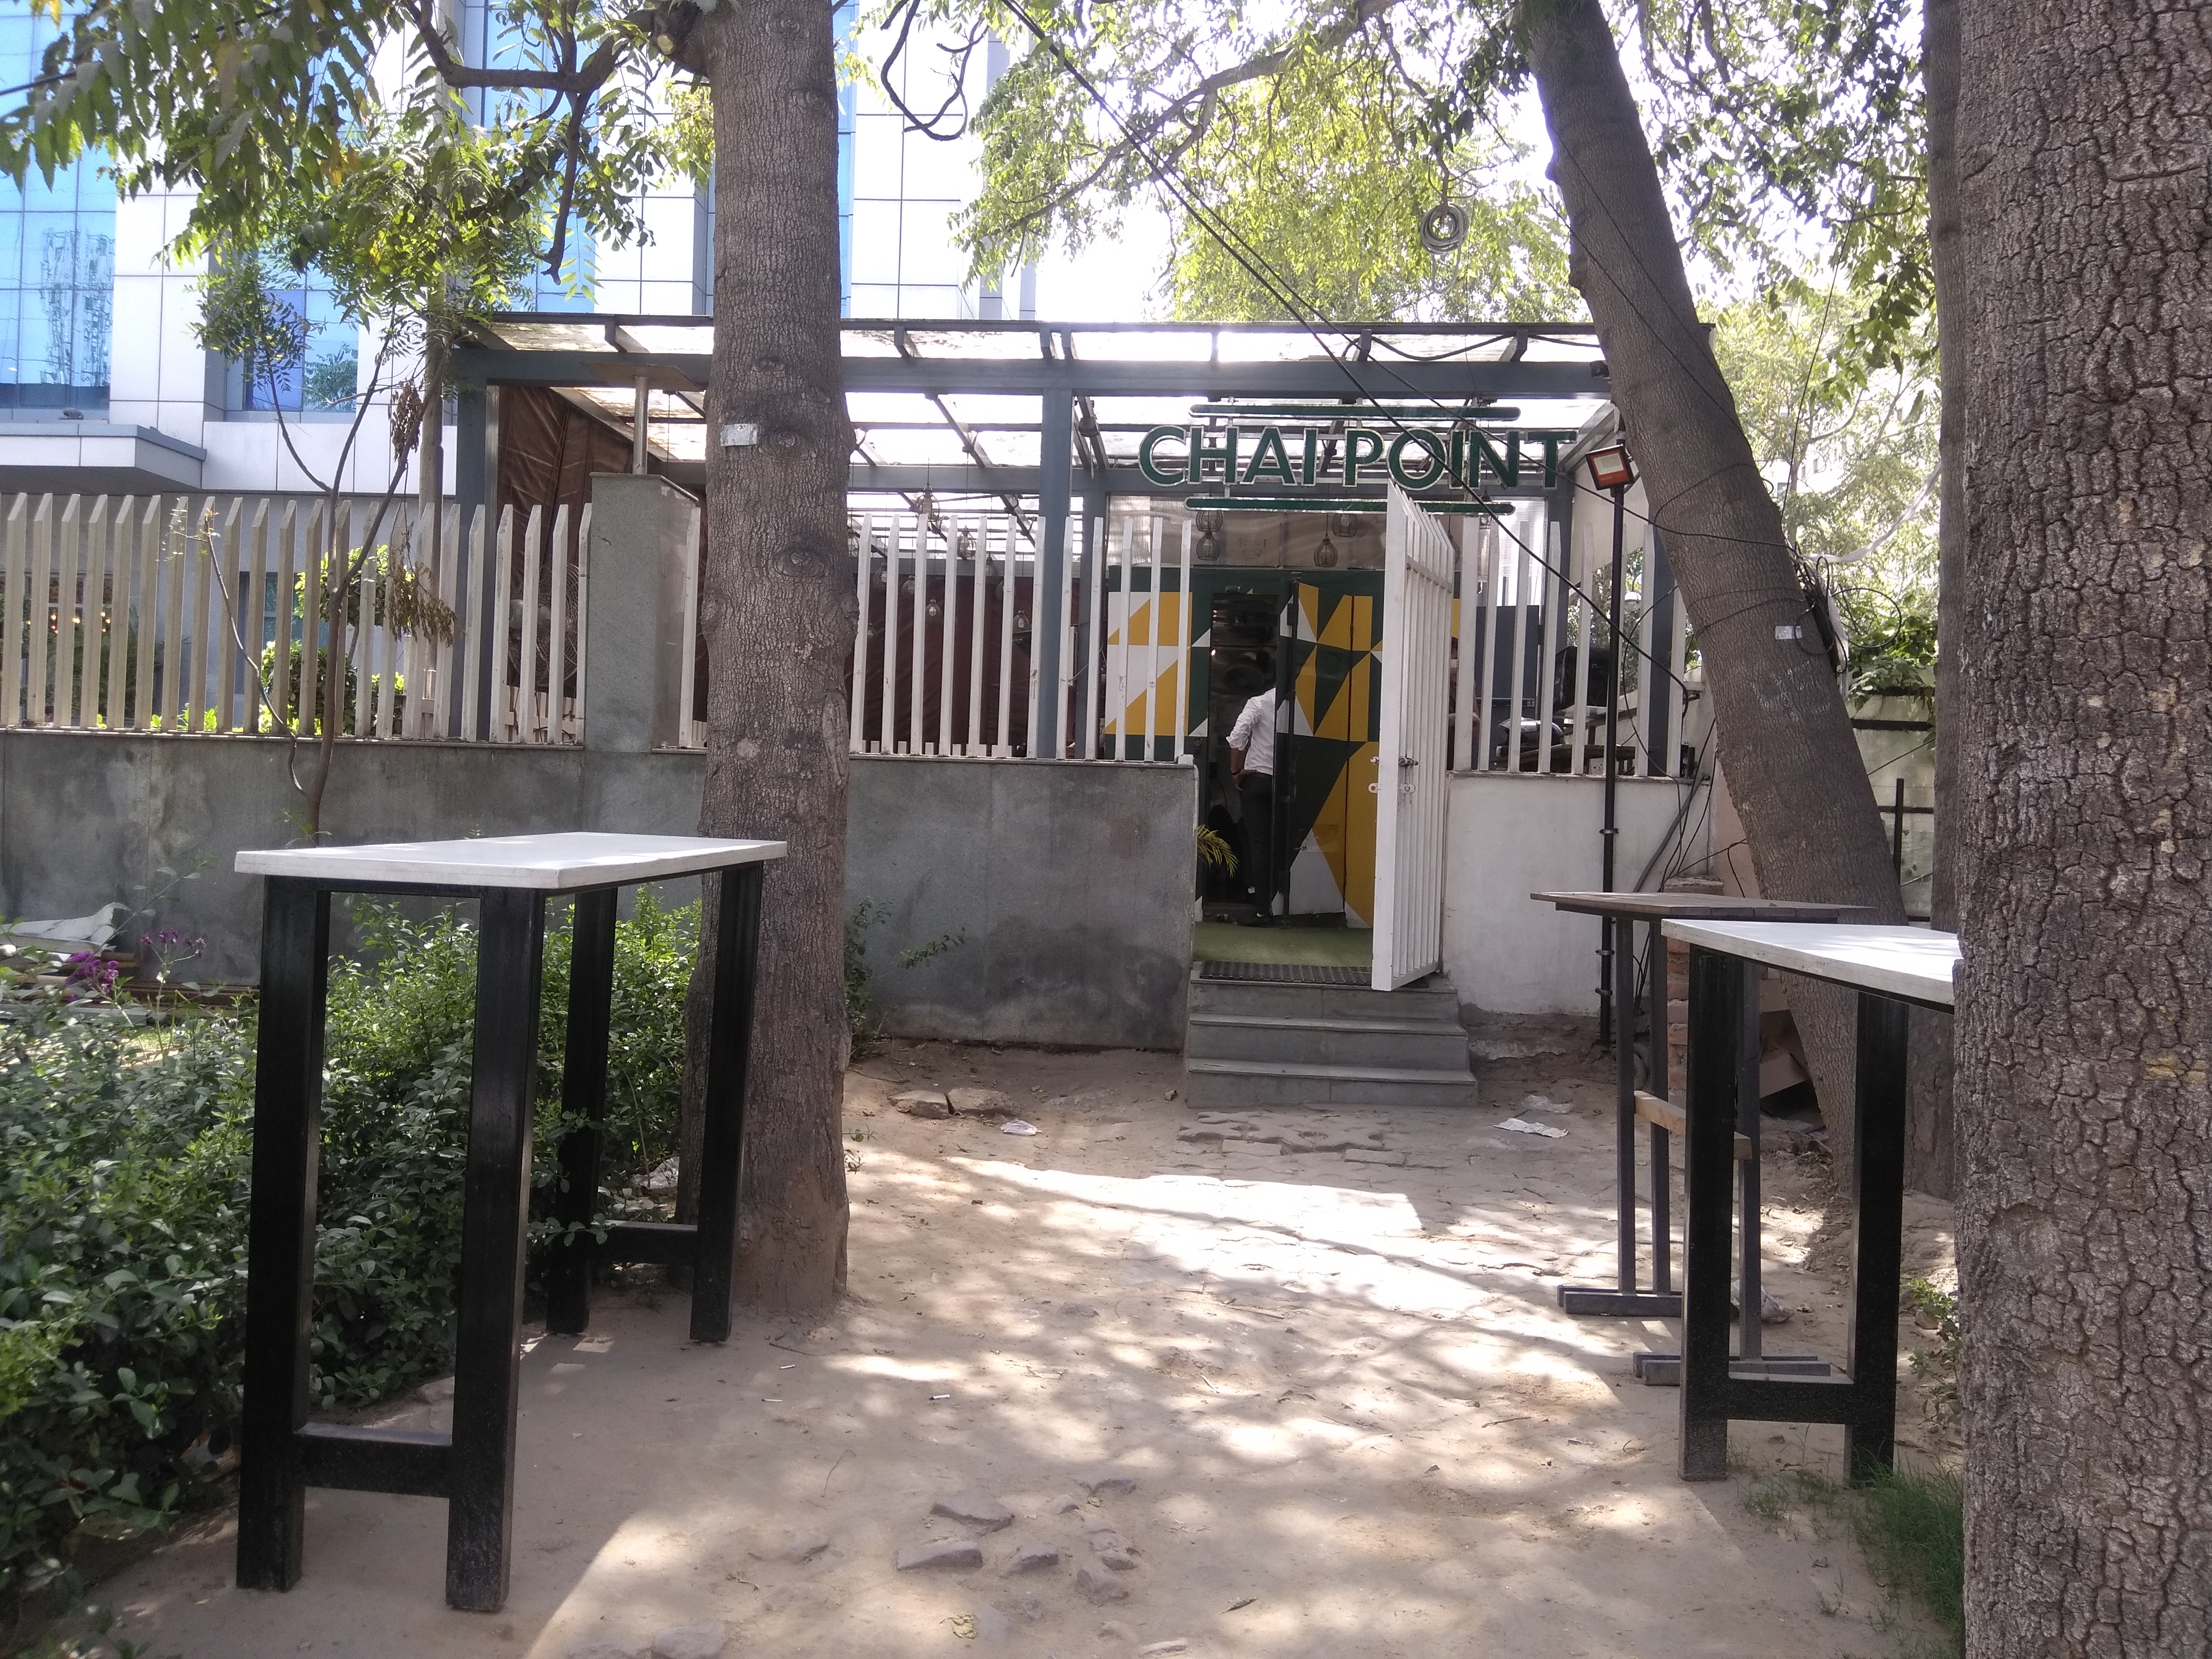 Chai Point - Sector 18, Gurugram Cafe - Sector 18, Gurugram